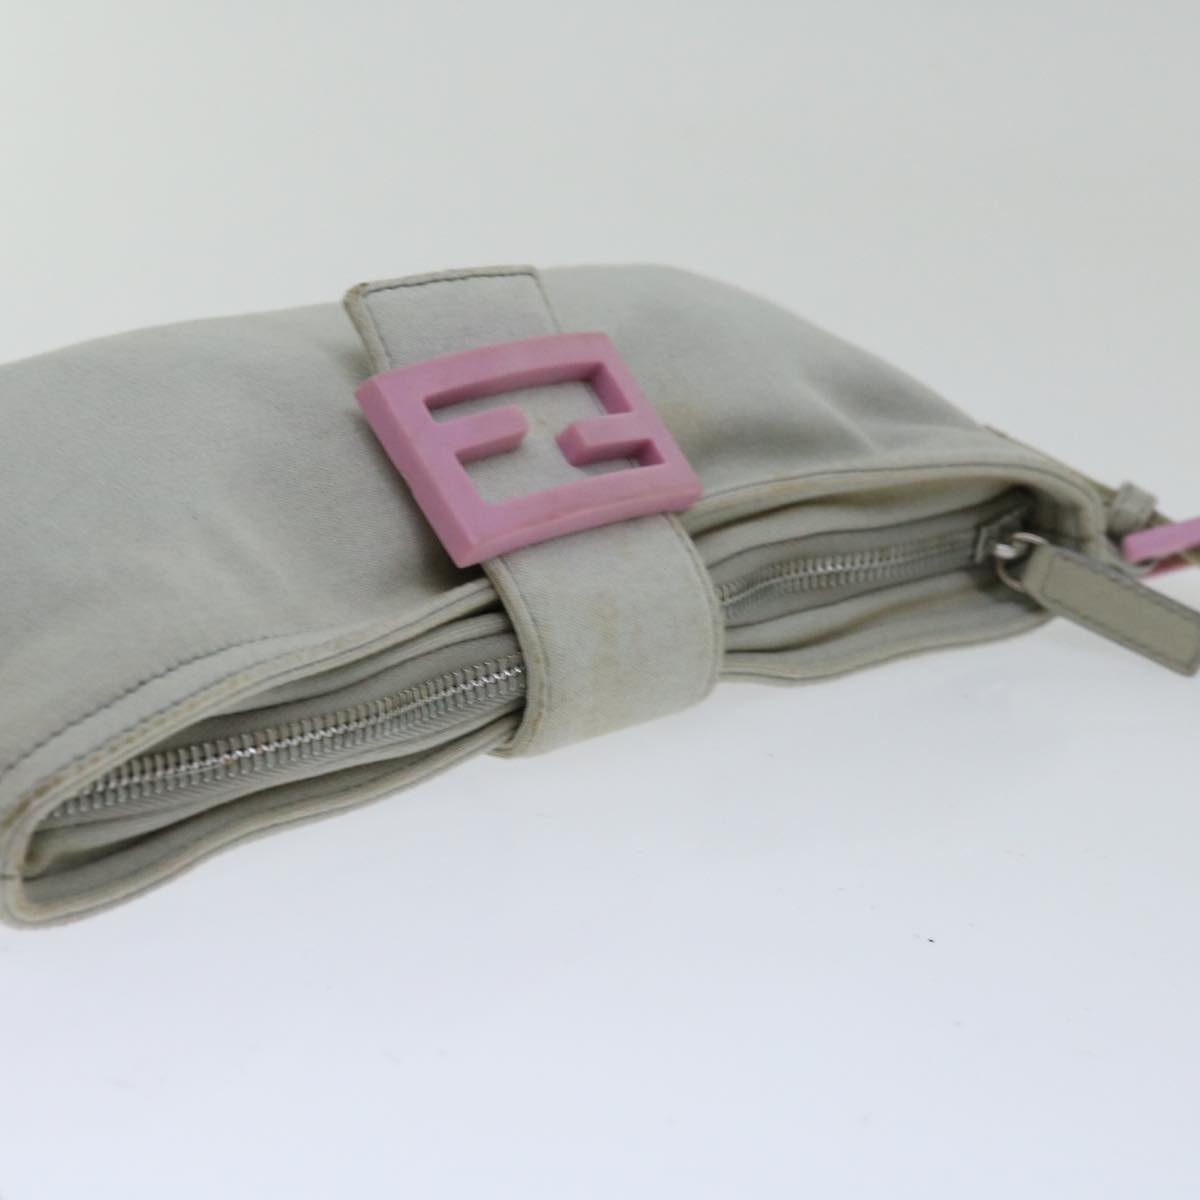 FENDI Mamma Baguette Shoulder Bag Nylon Gray Auth 66503